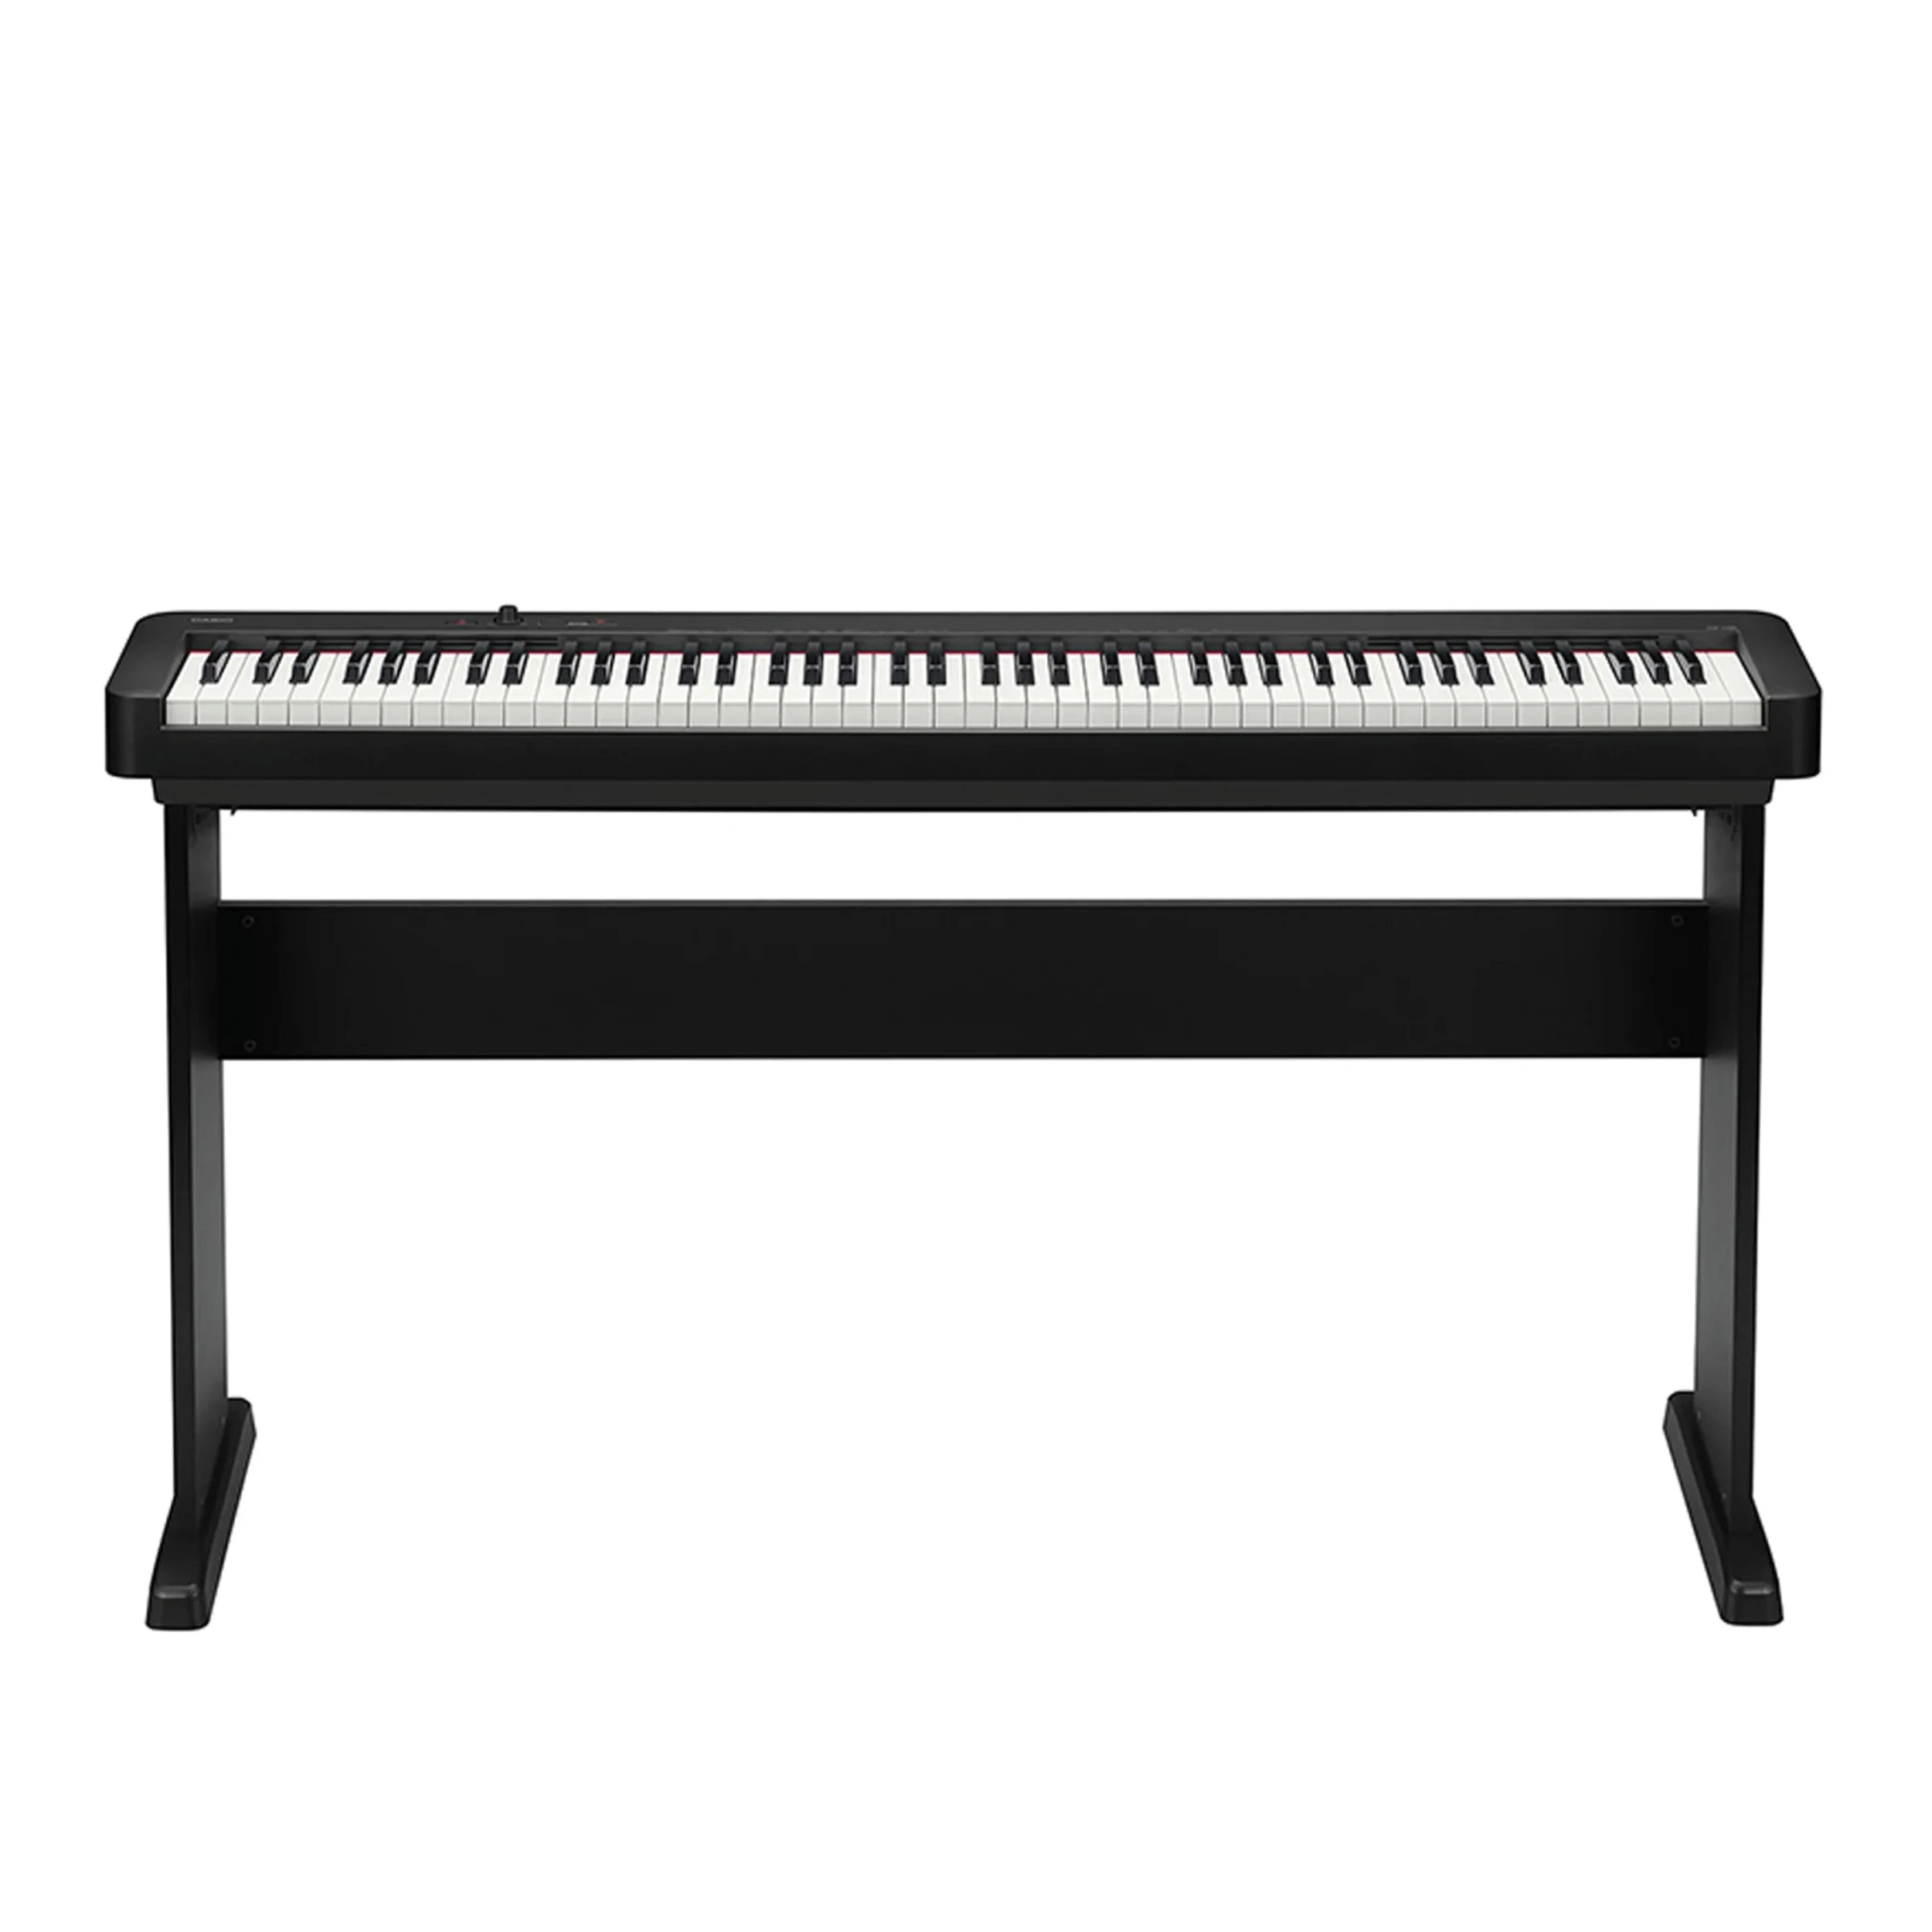 CASIO CDP-S110 električni klavir + CS-46 stalak za klavir Paket